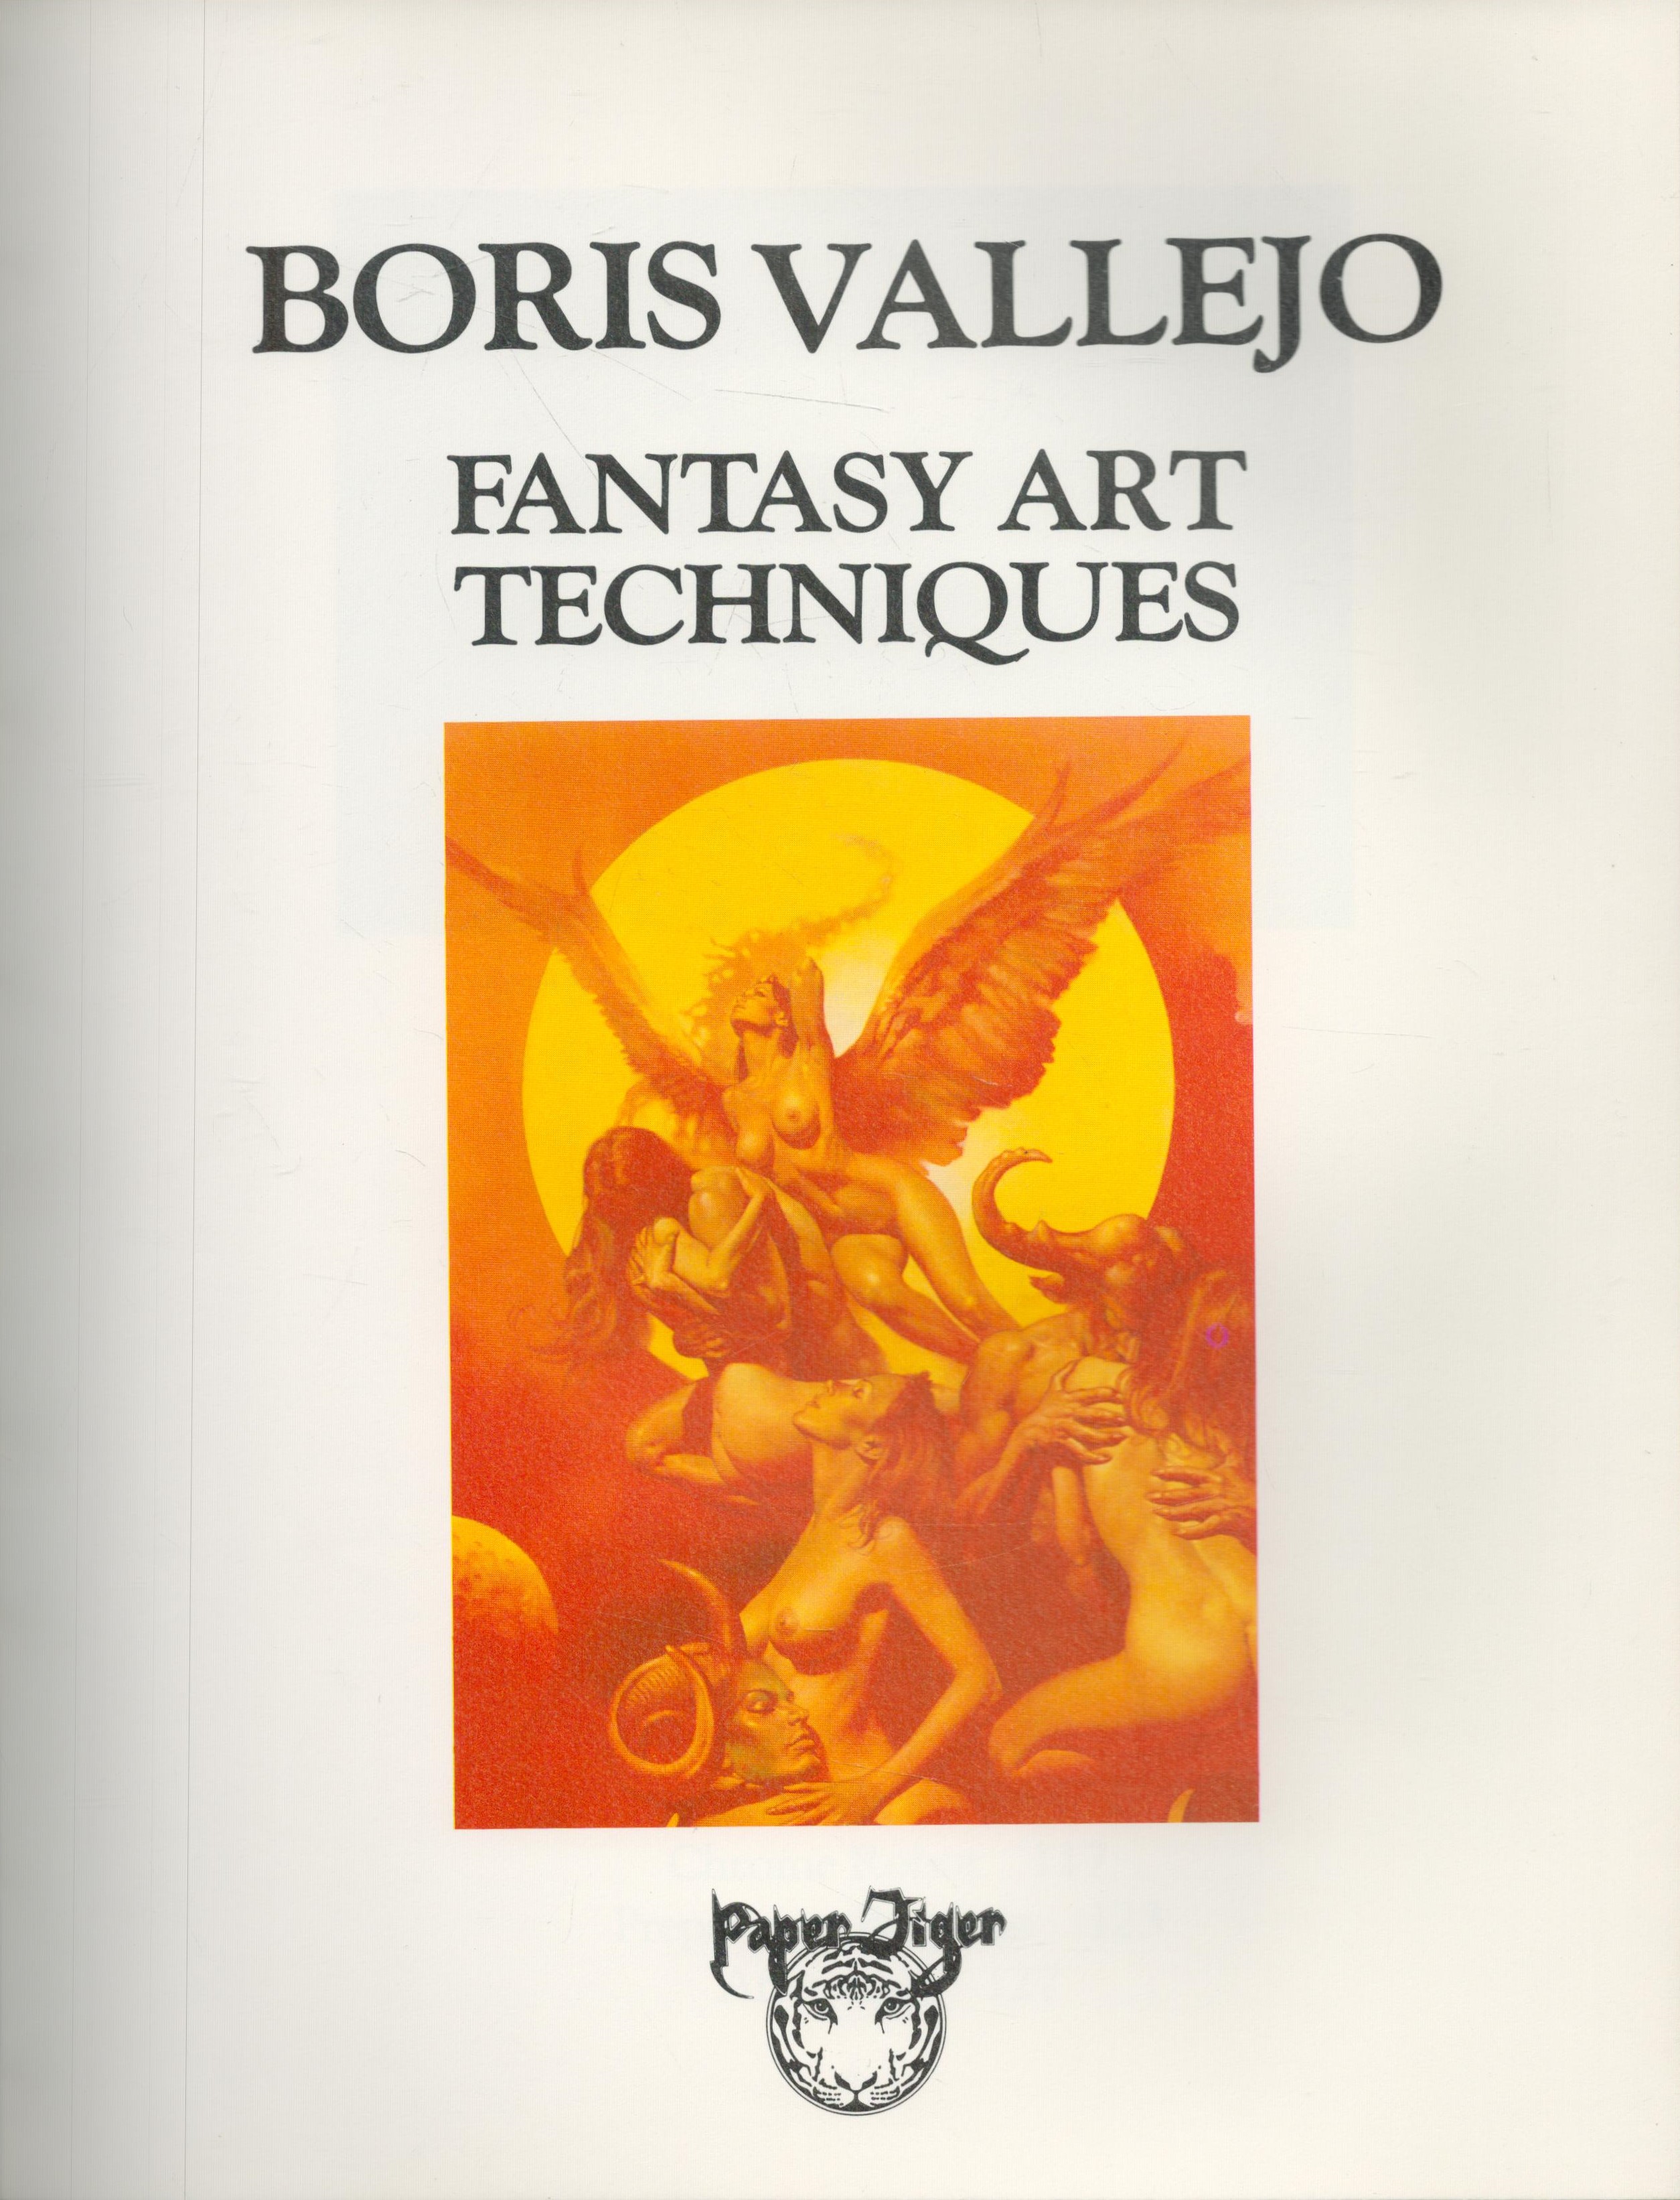 Fantasy Art Techniques & The Fantastic Art of Boris Vallejo 1985 & 1978 softback books with 127 & - Image 2 of 6